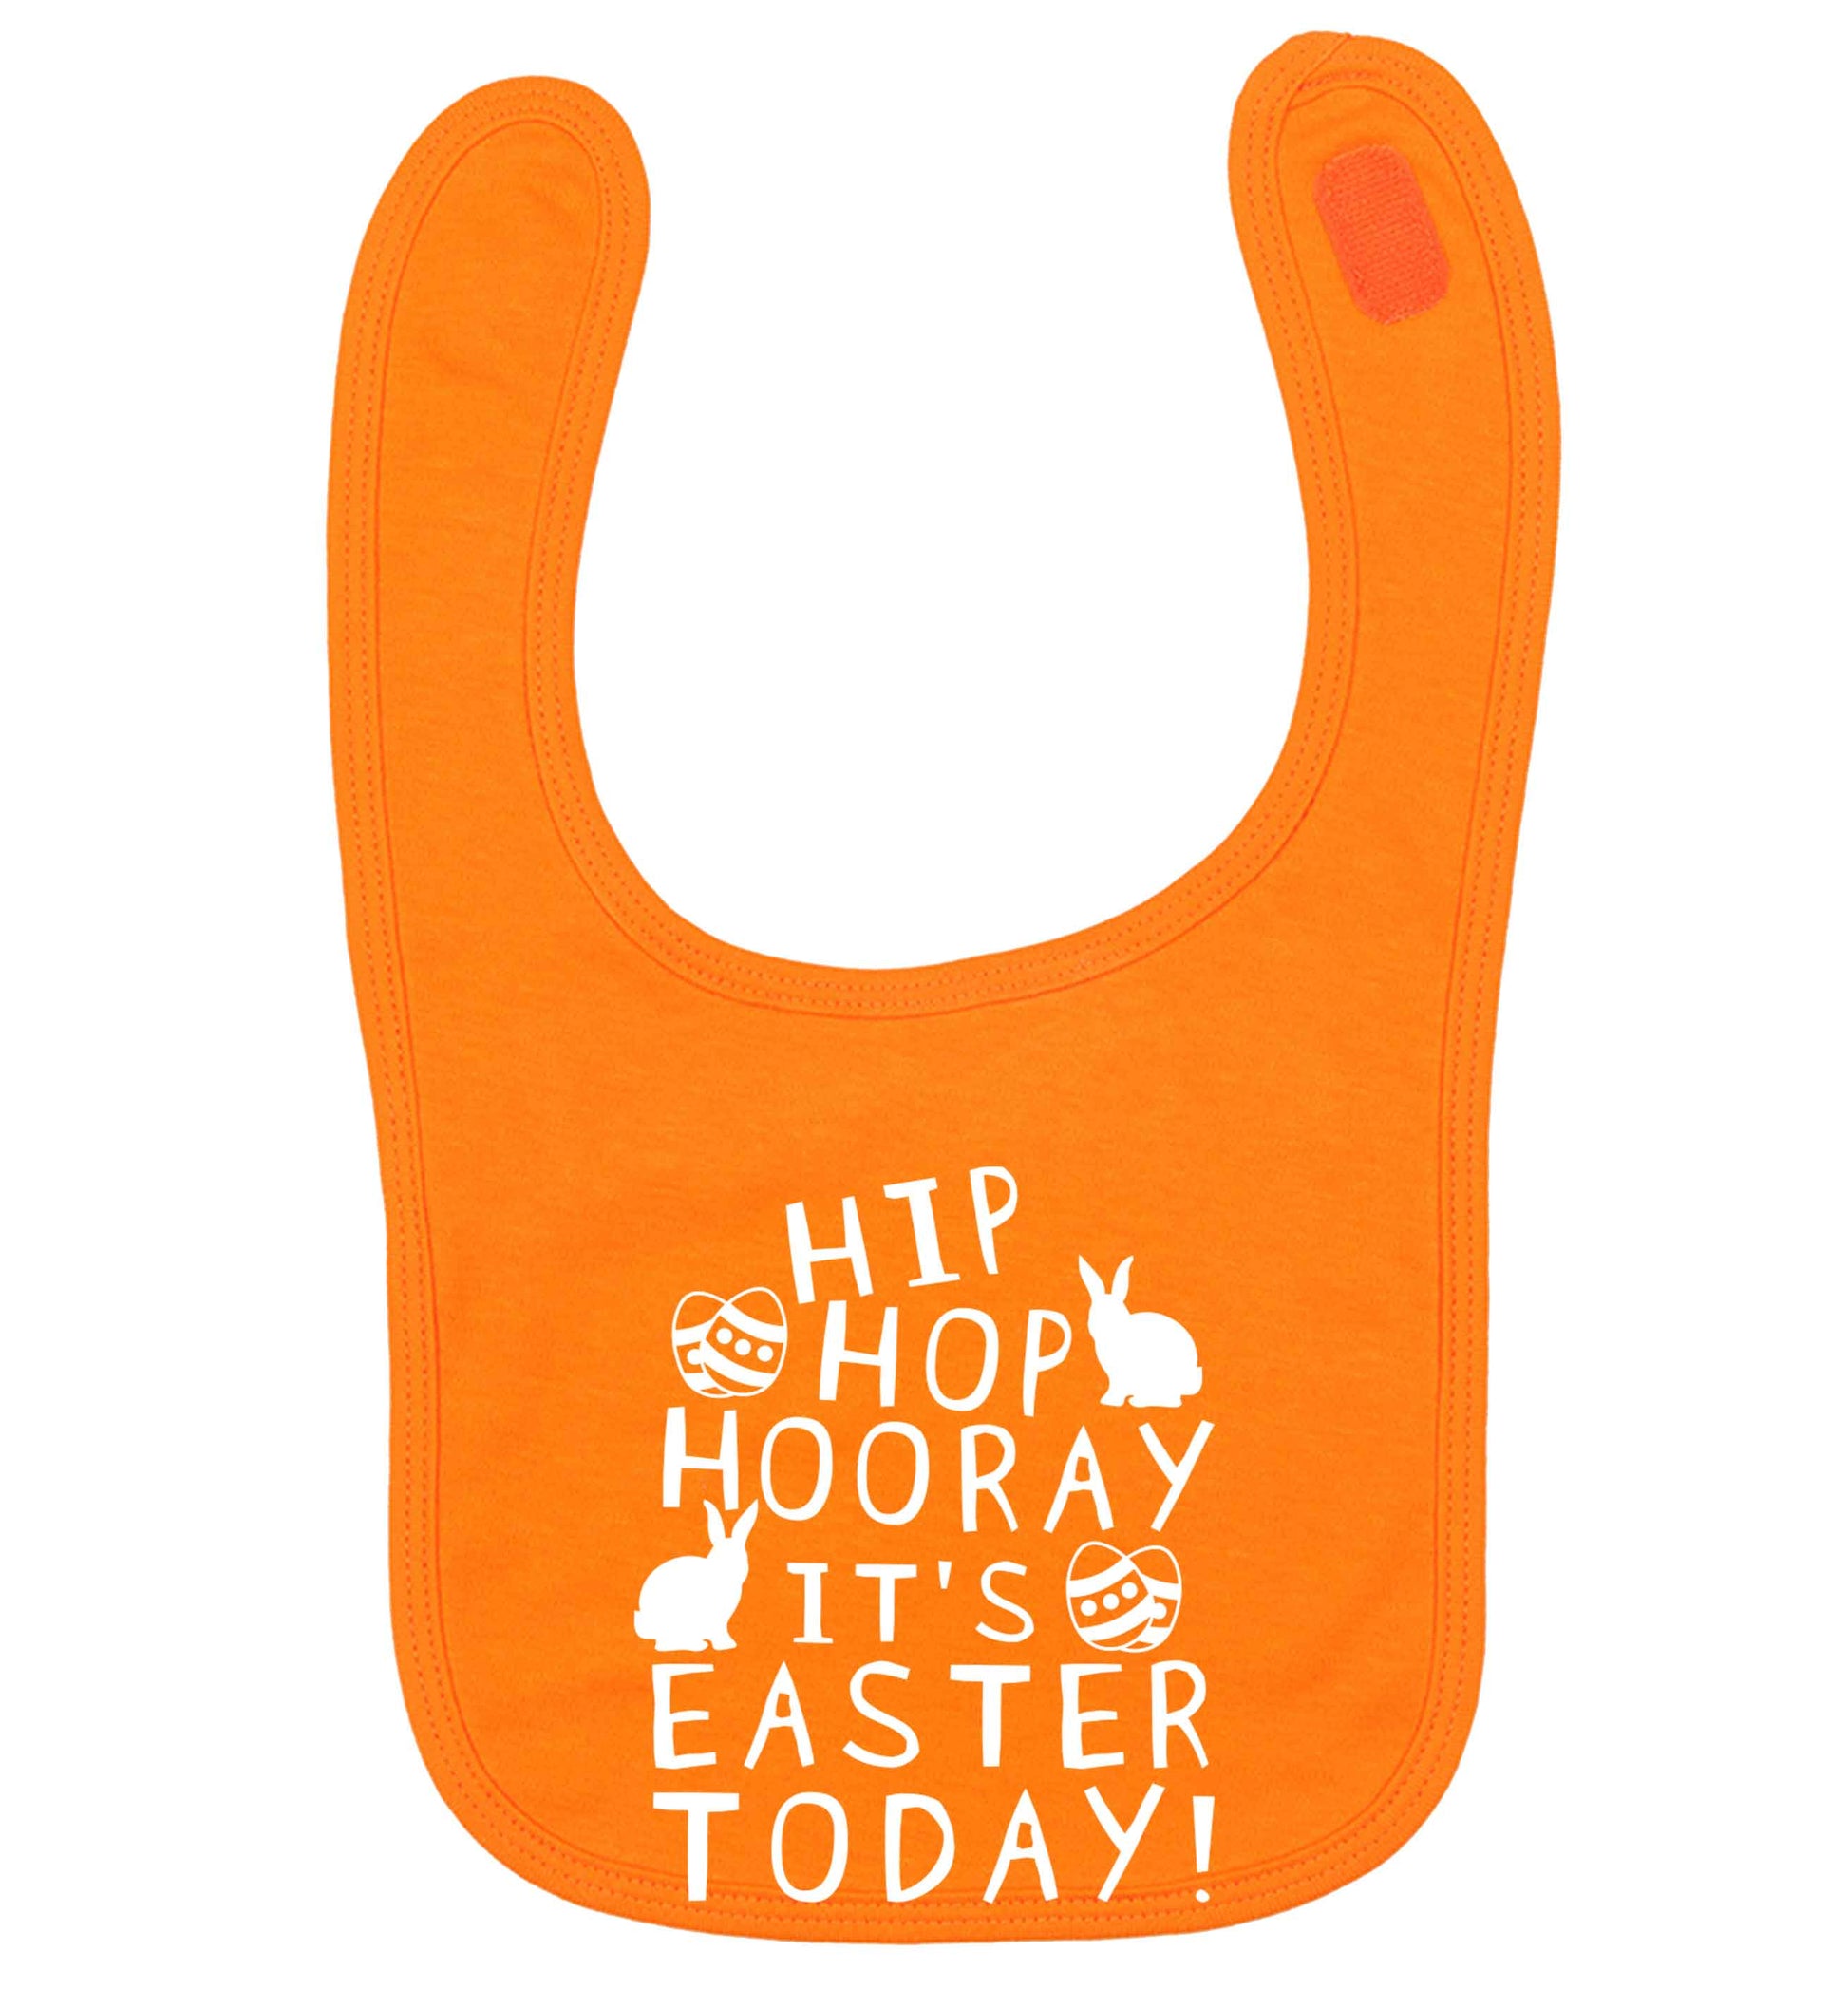 Hip hip hooray it's Easter today! orange baby bib